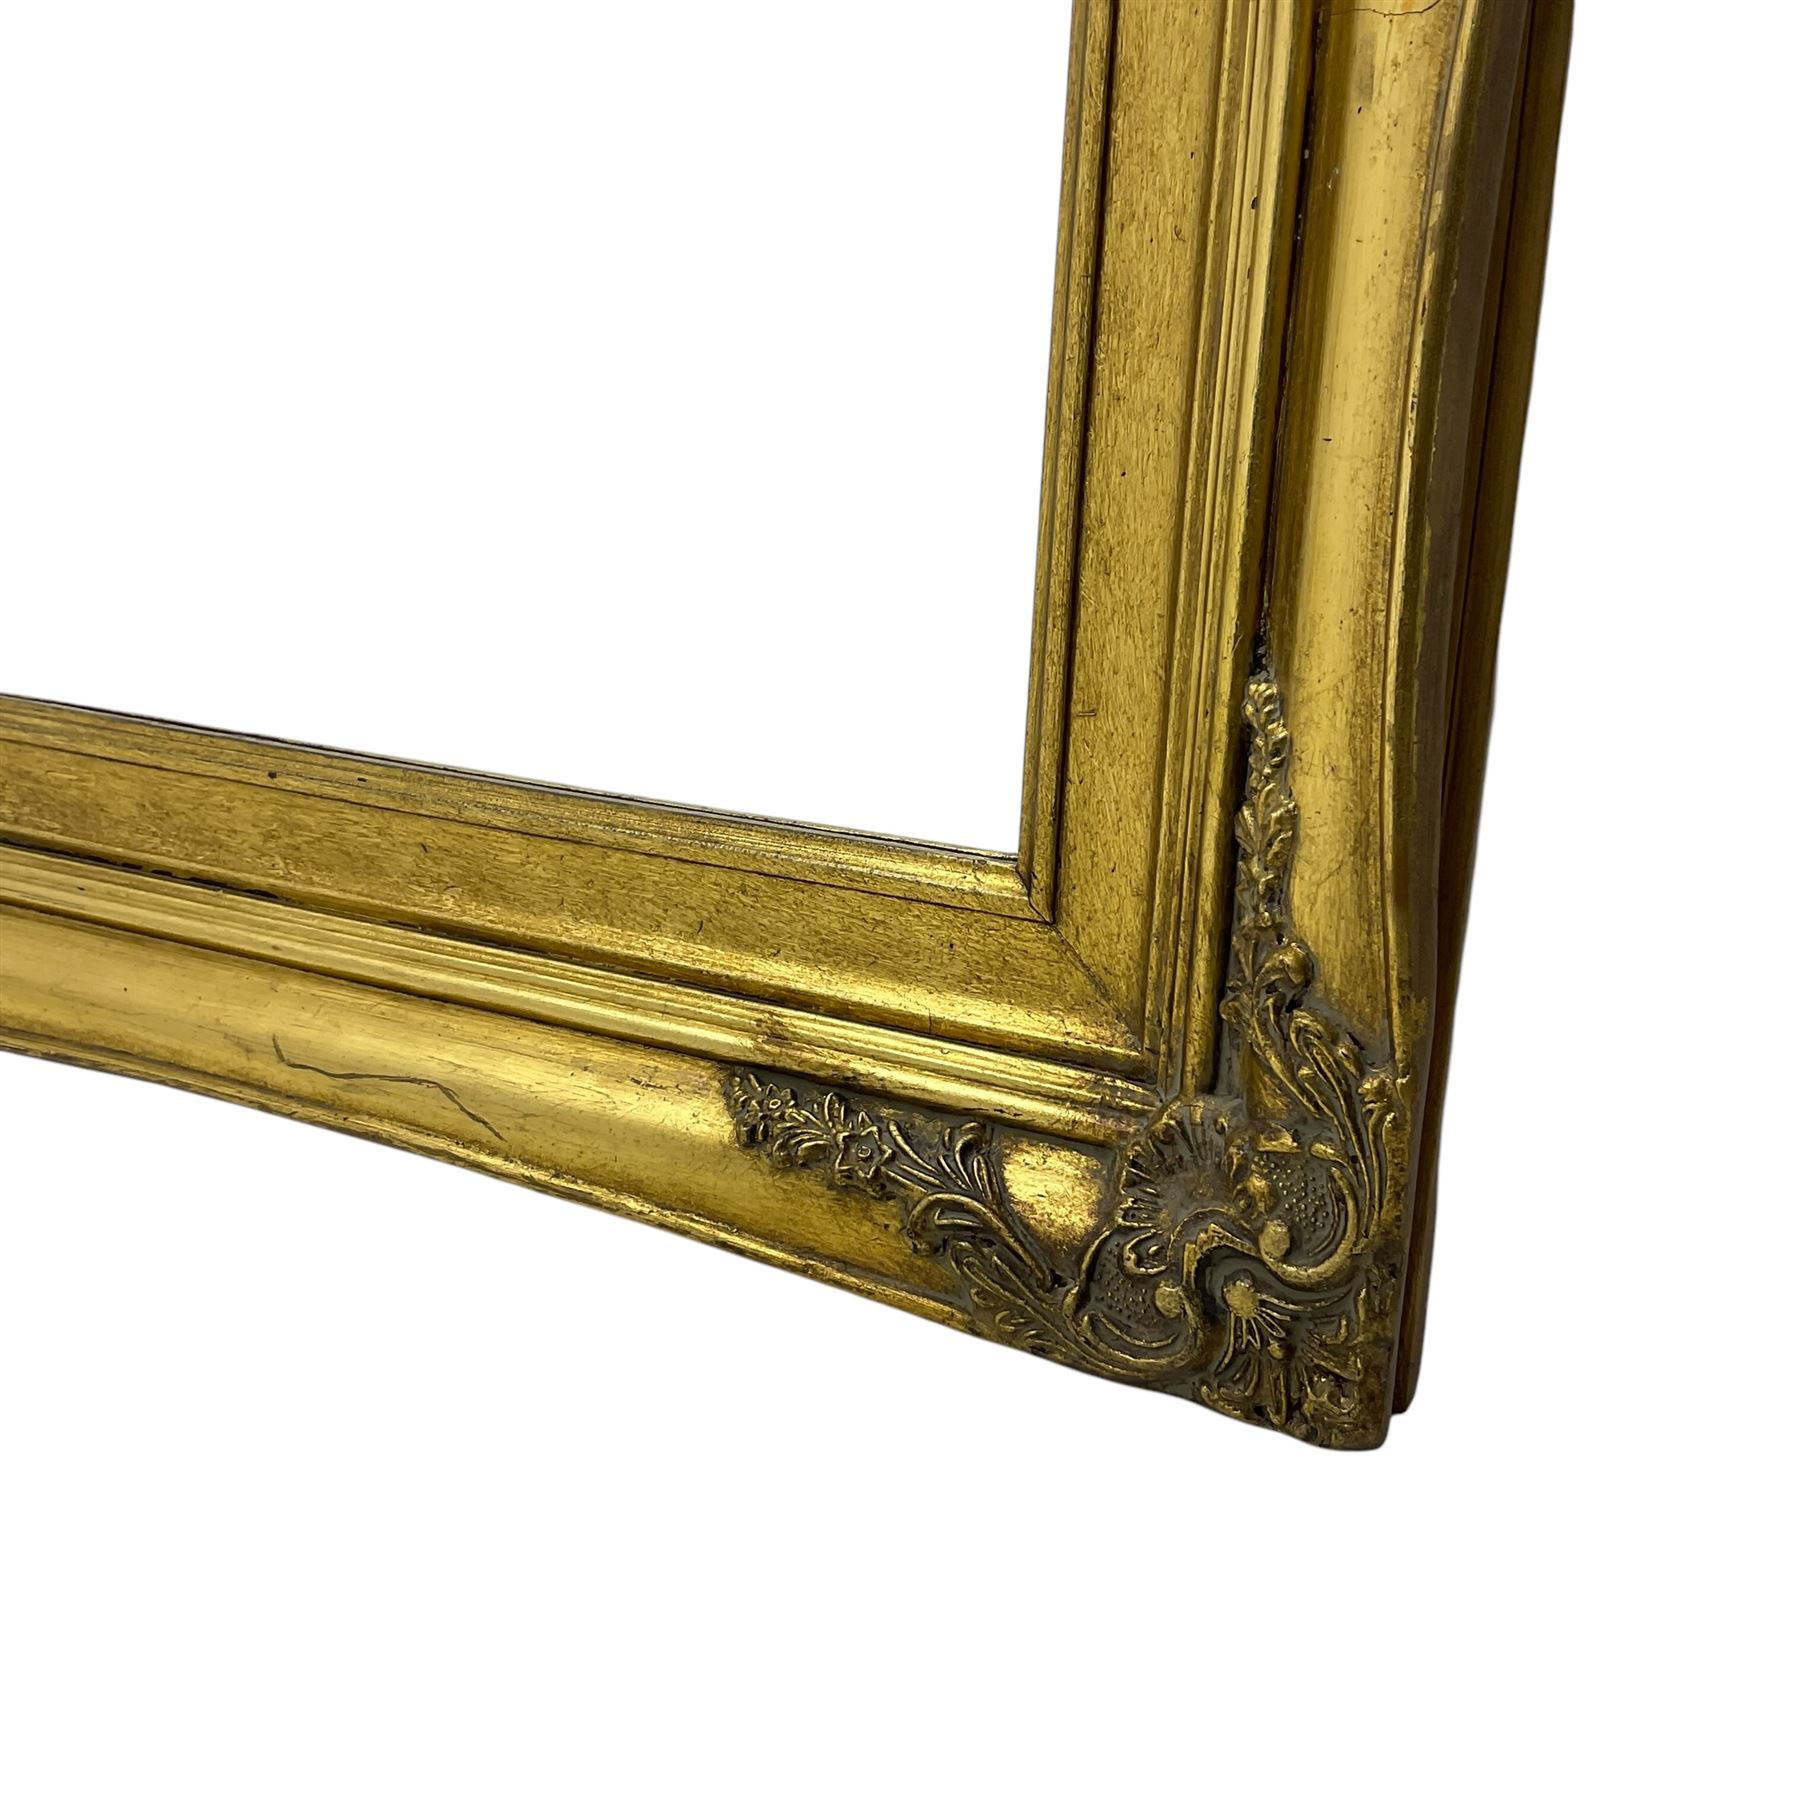 Gilt framed wall mirror - Image 4 of 5